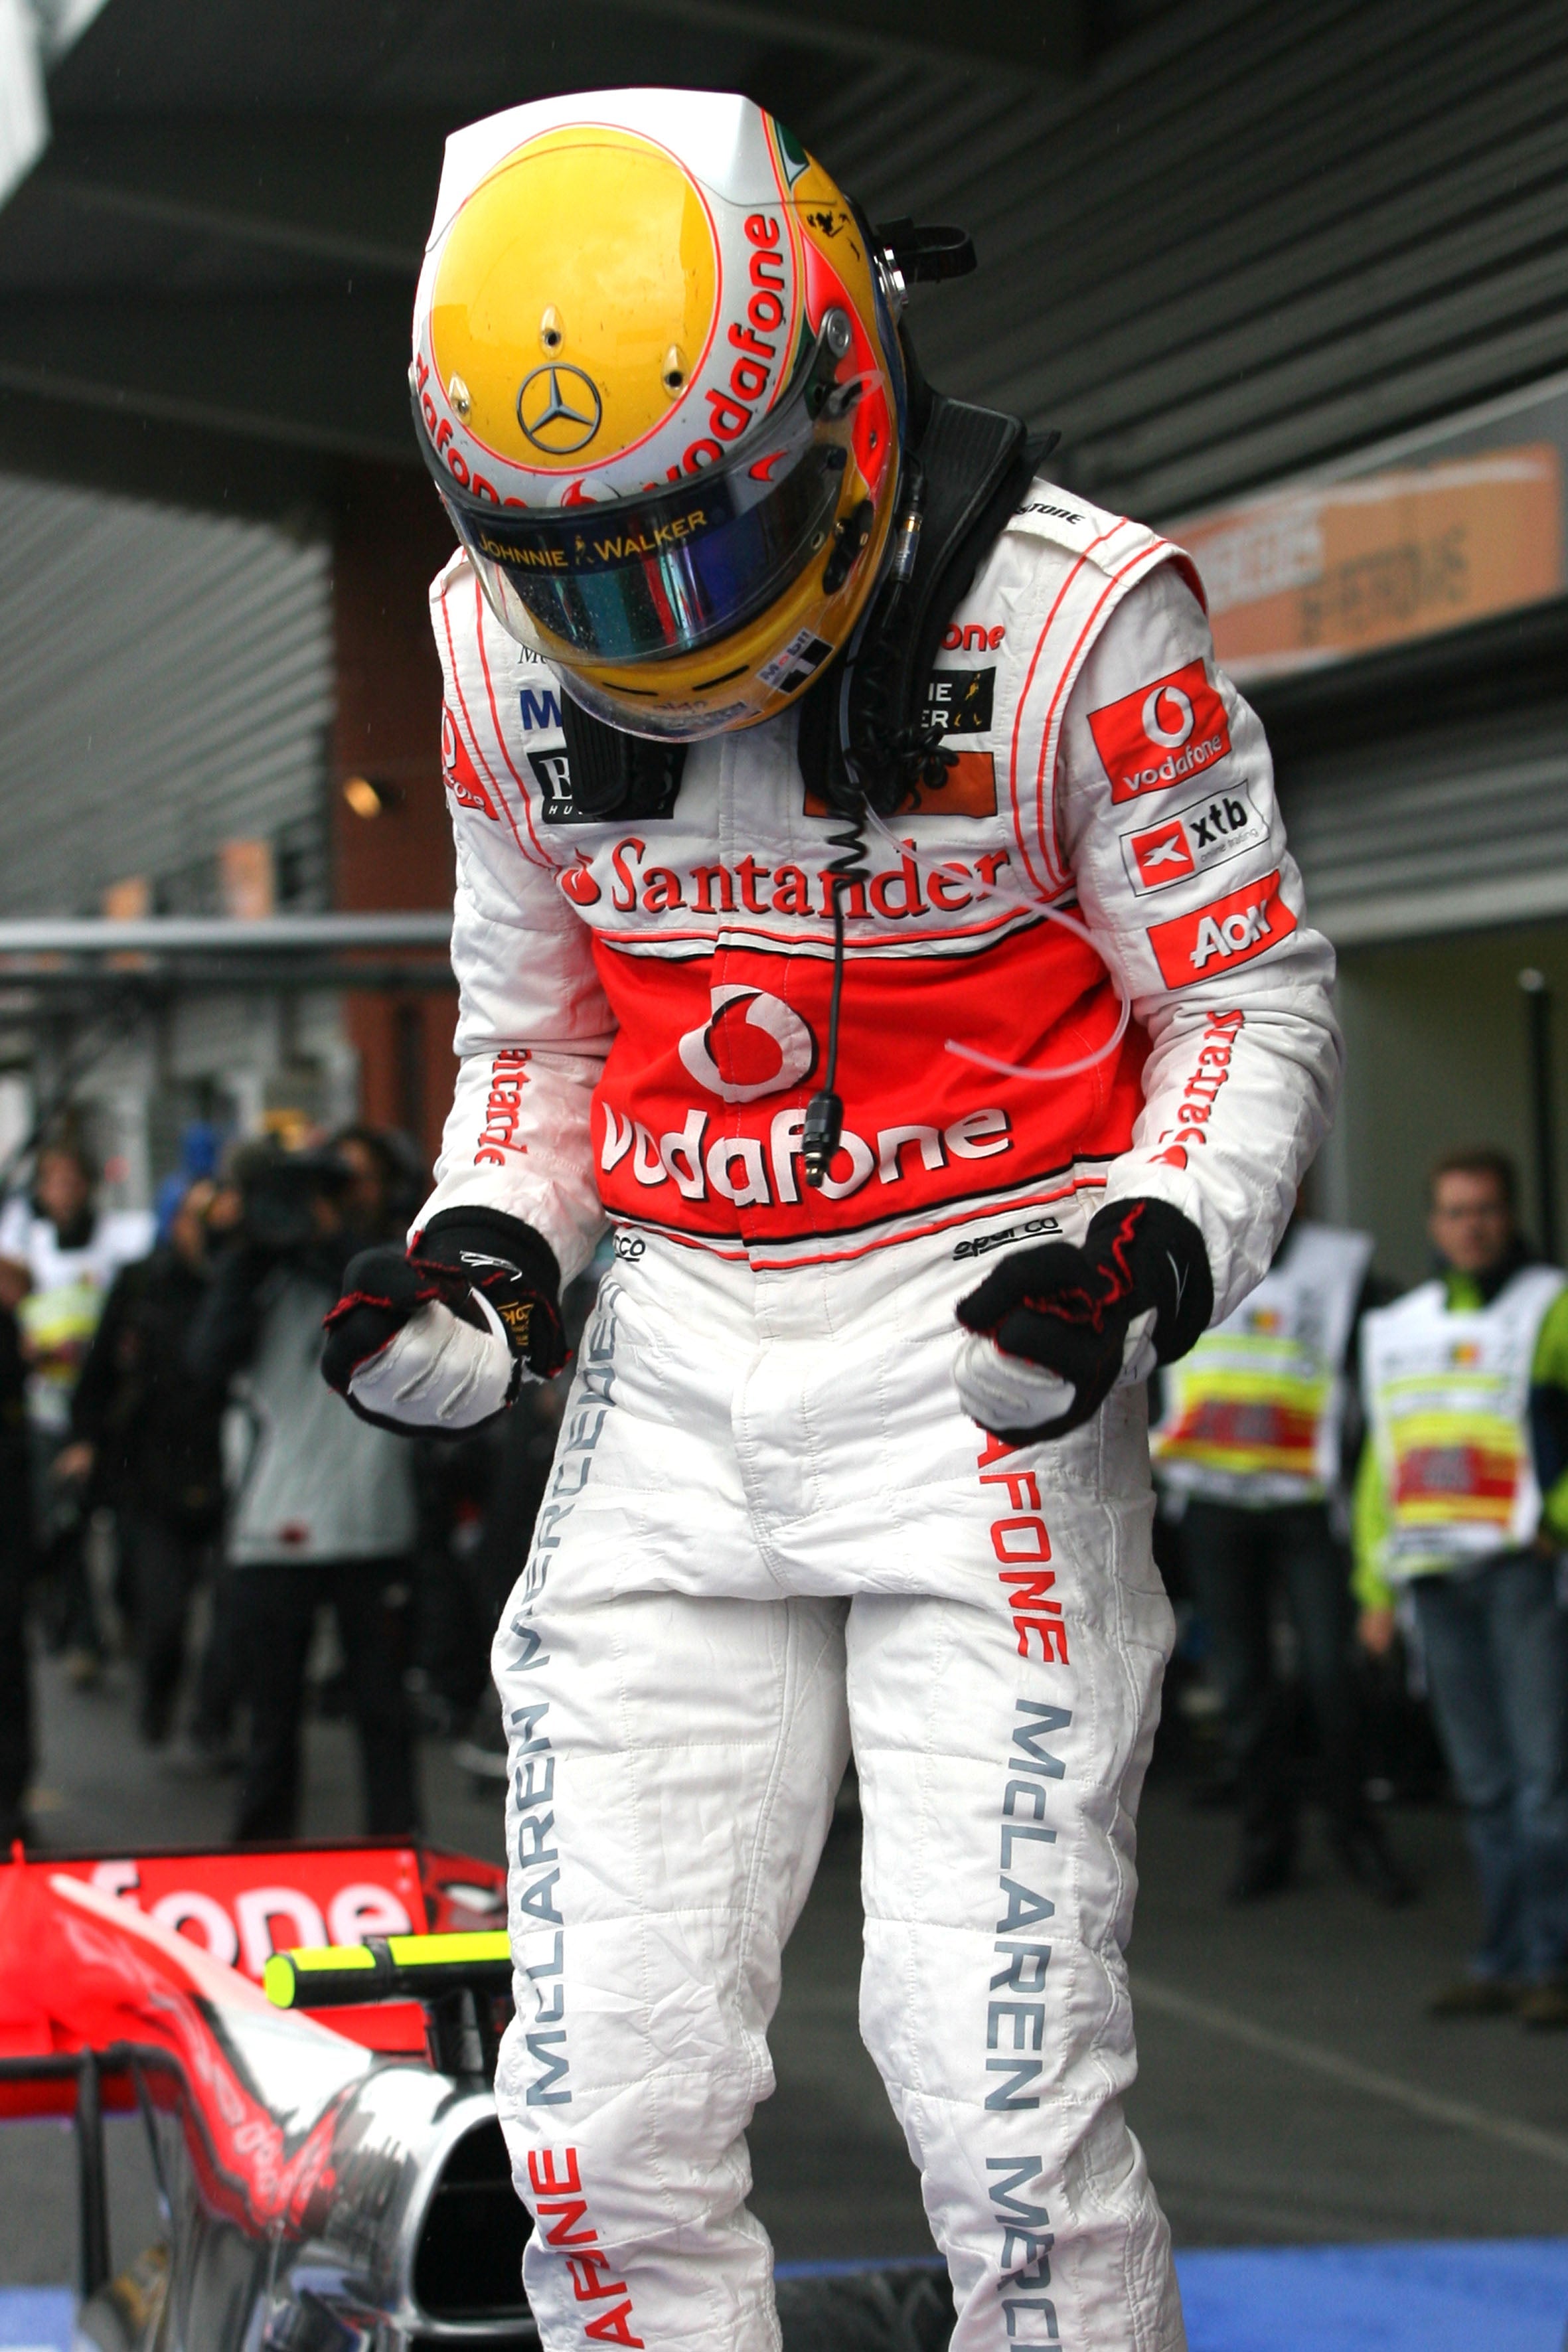 Lewis Hamilton 2010 Replica McLaren F1 Team Race Gloves